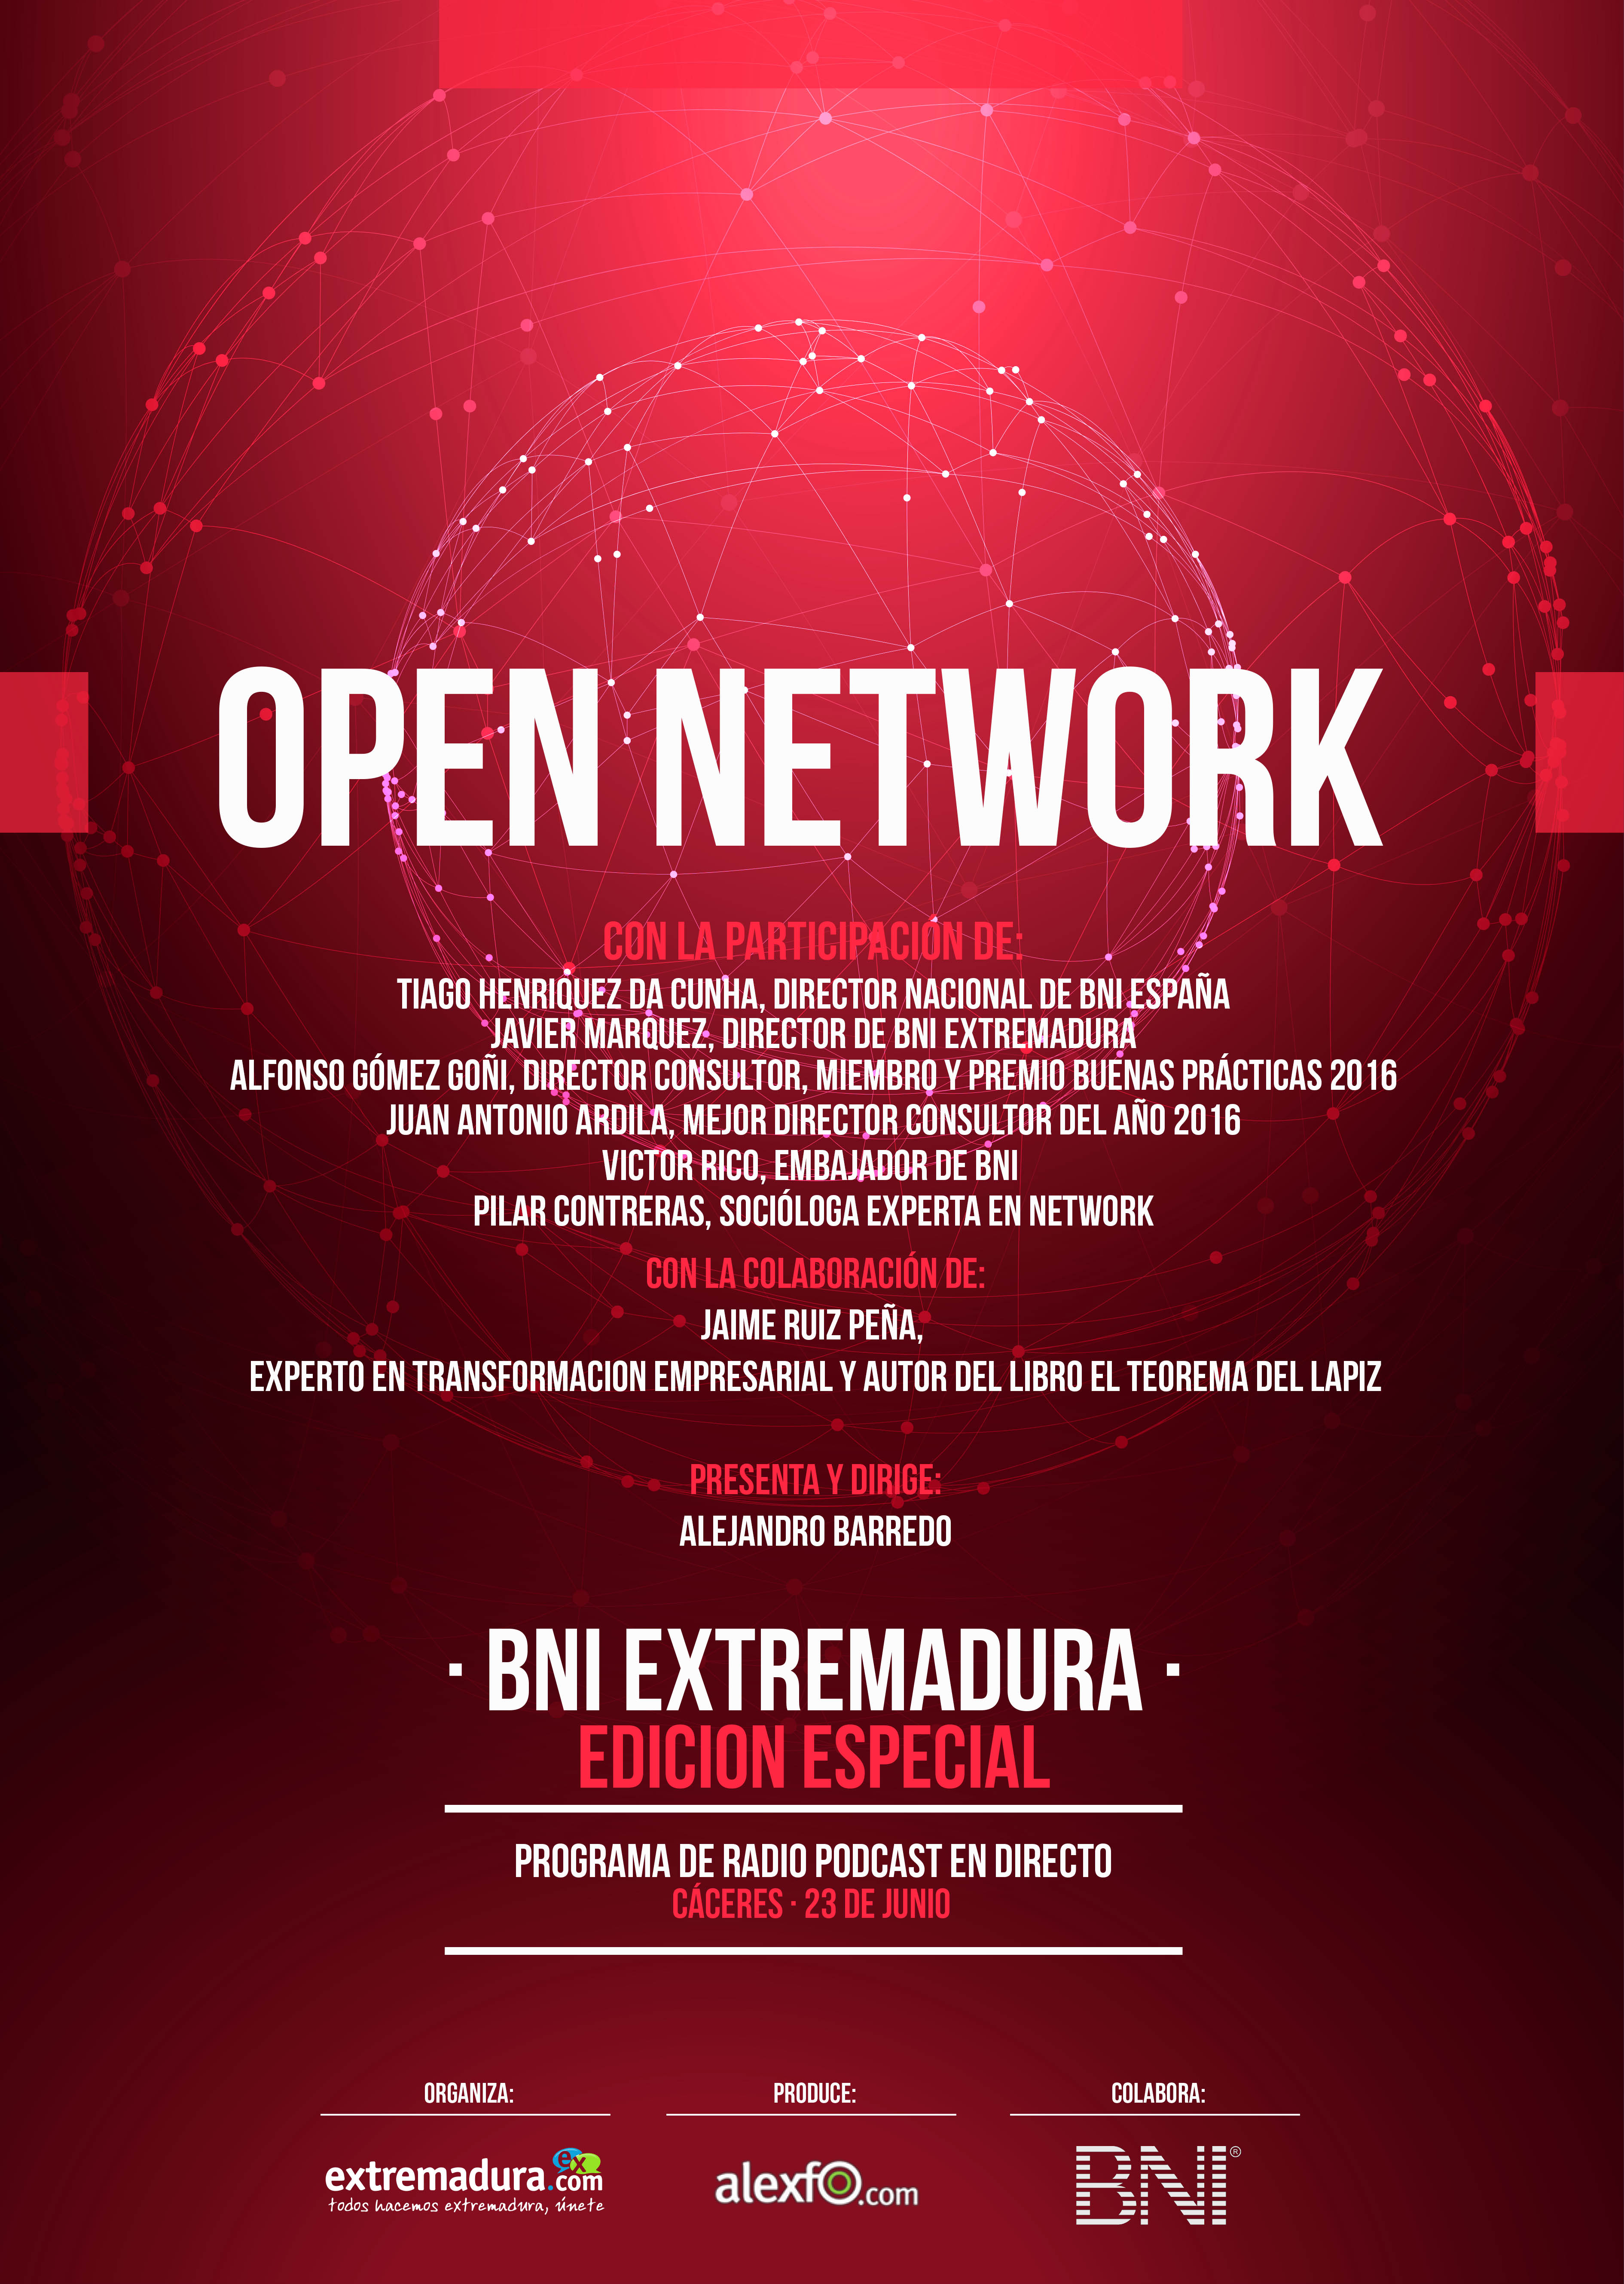 Open network edicion especial bni extremadura